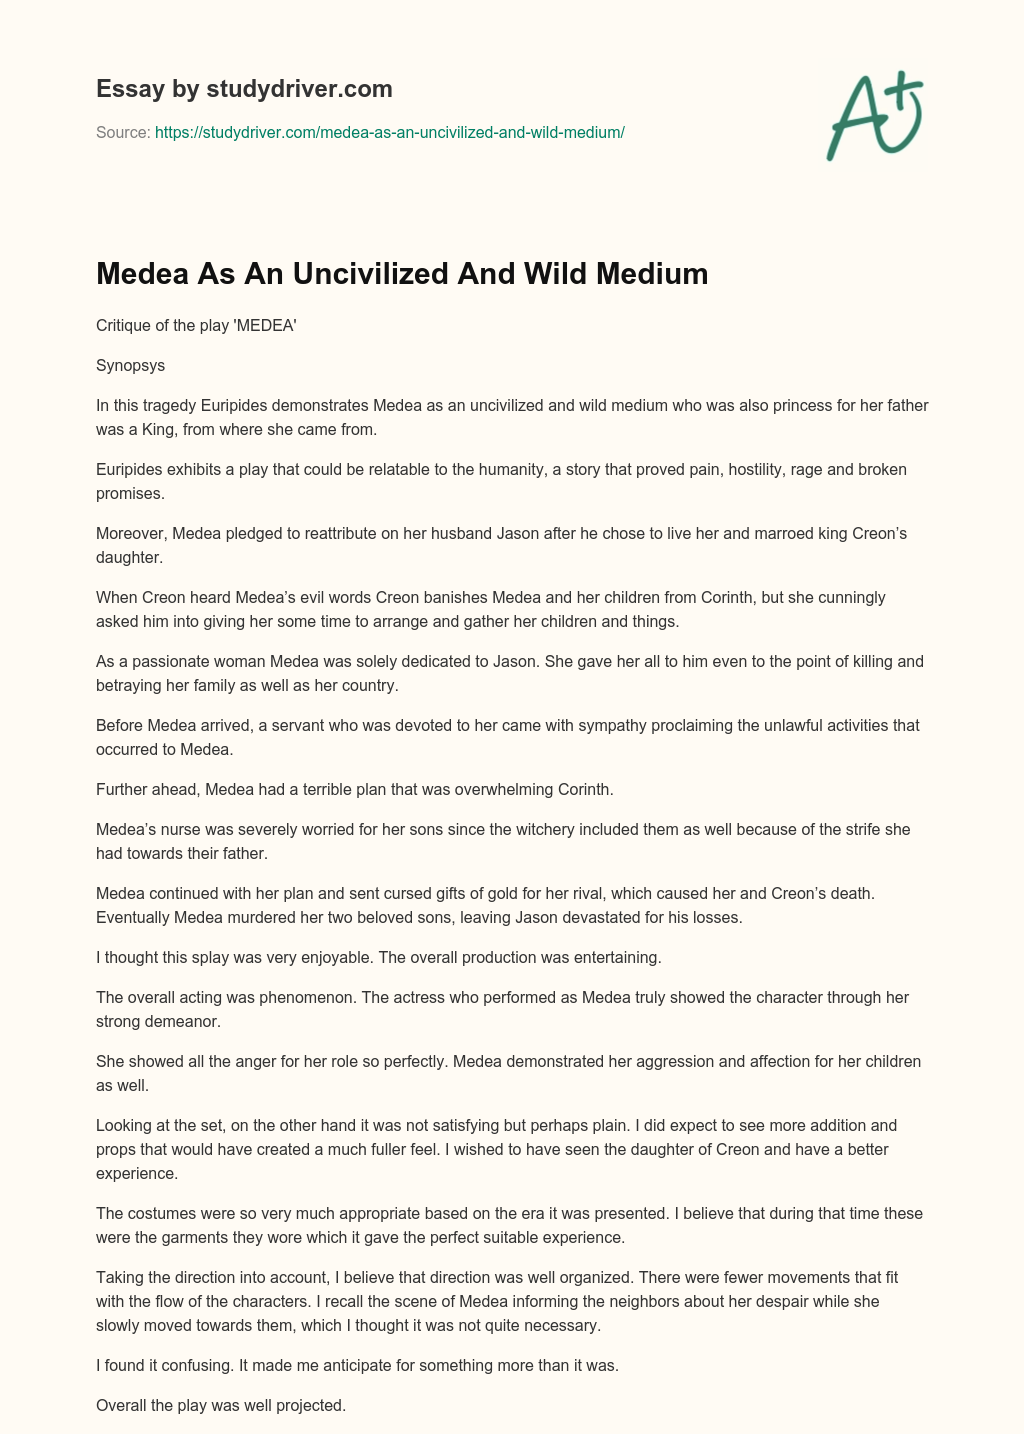 Medea as an Uncivilized and Wild Medium essay